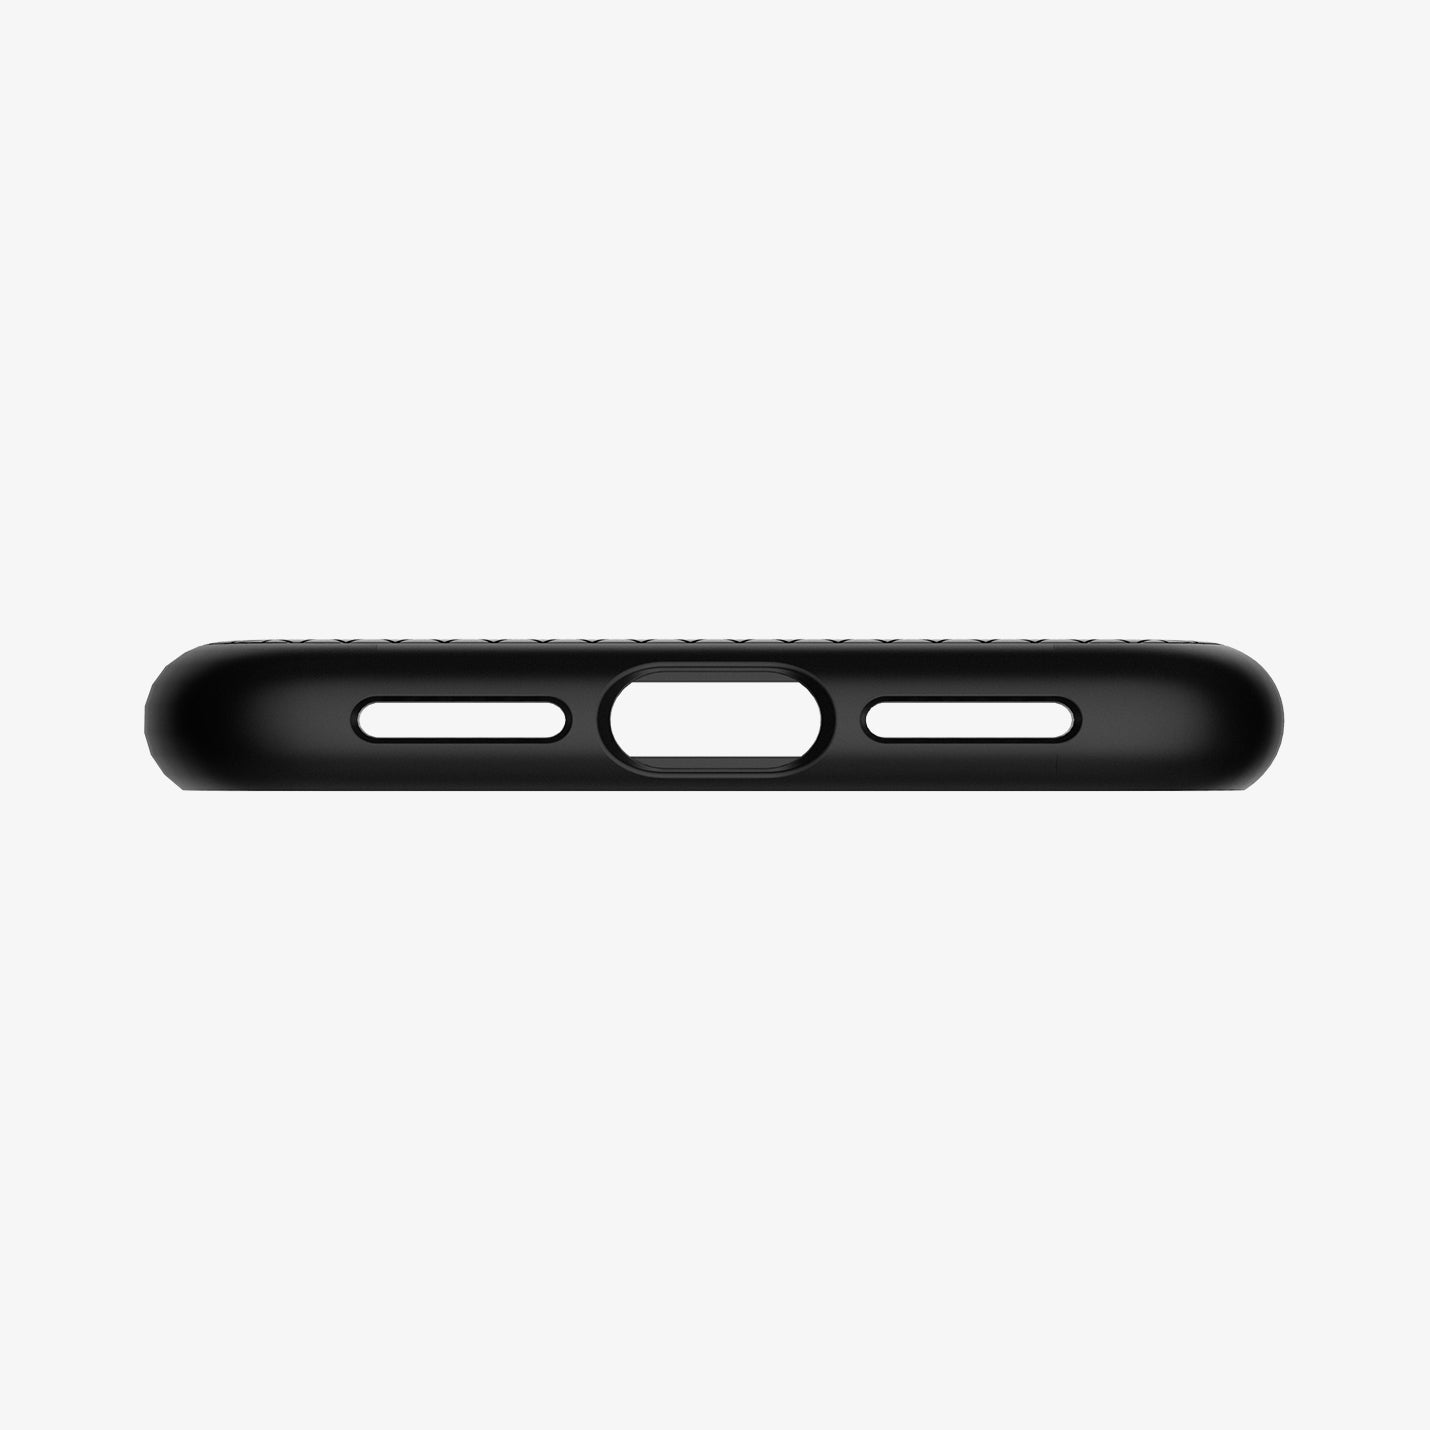 064CS24872 - iPhone XR Case Liquid Air in Black showing the bottom